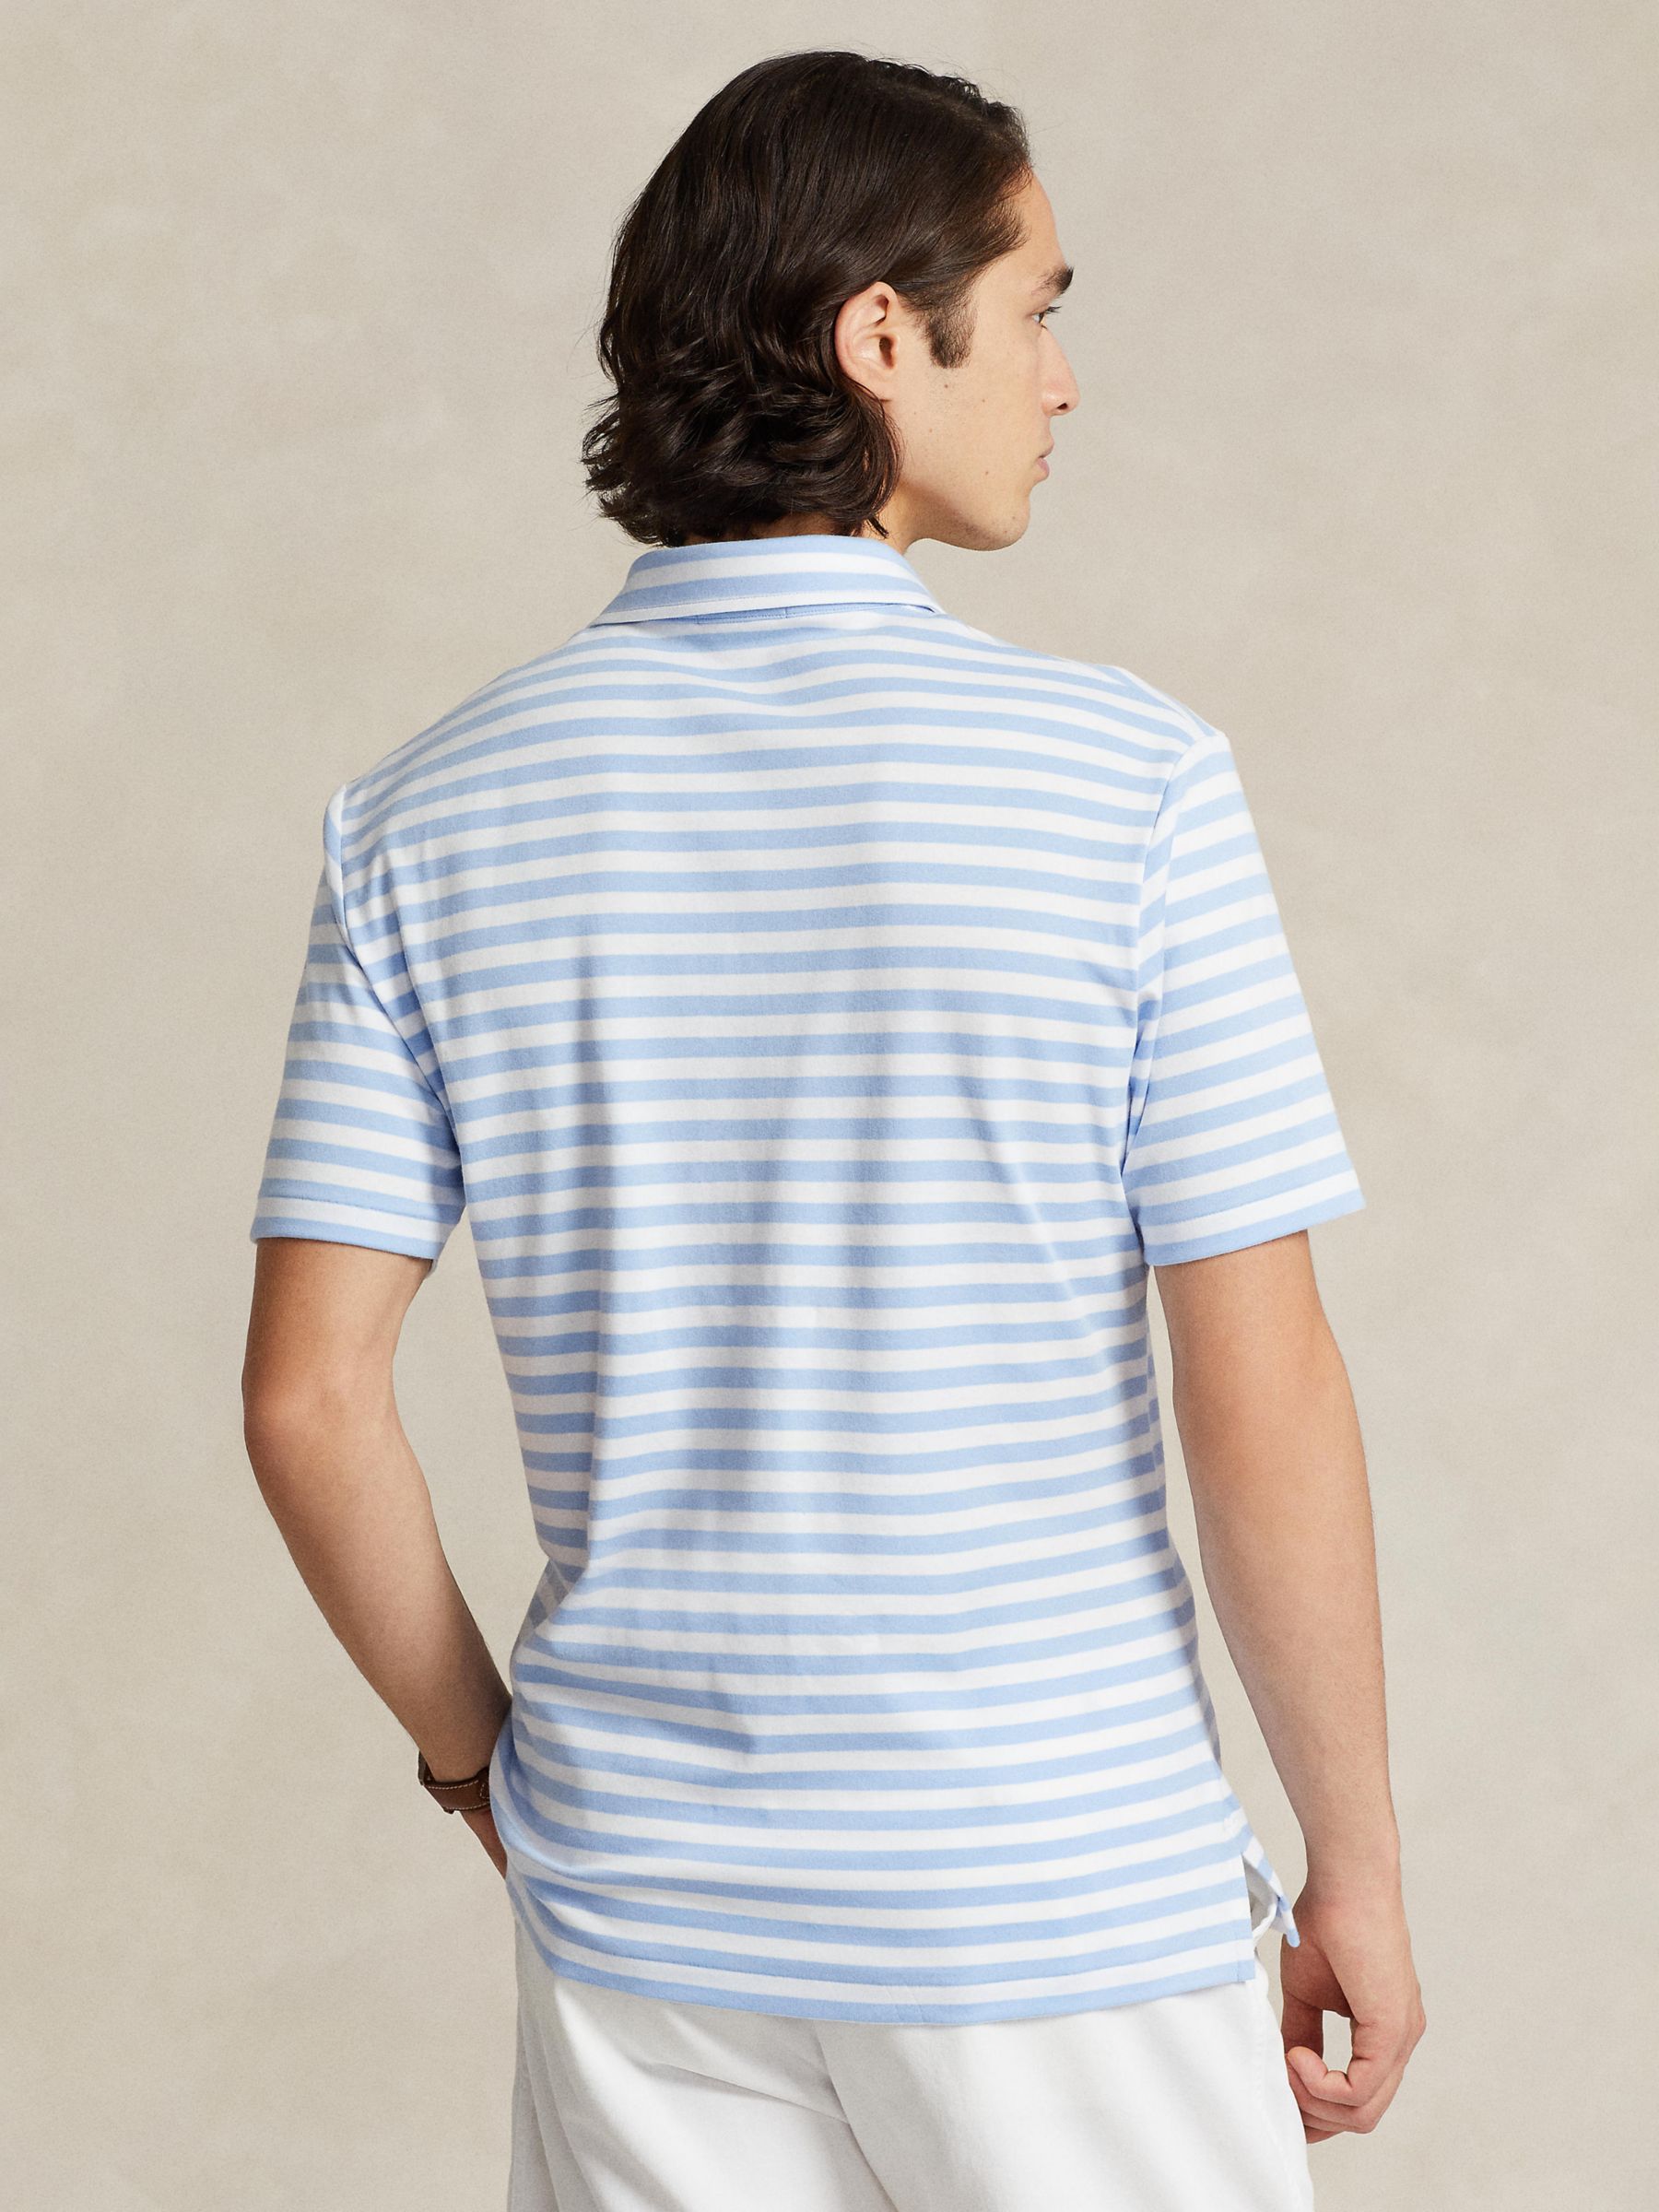 Ralph Lauren Slim Fit Soft Cotton Polo Shirt, Austin Blue/White, S